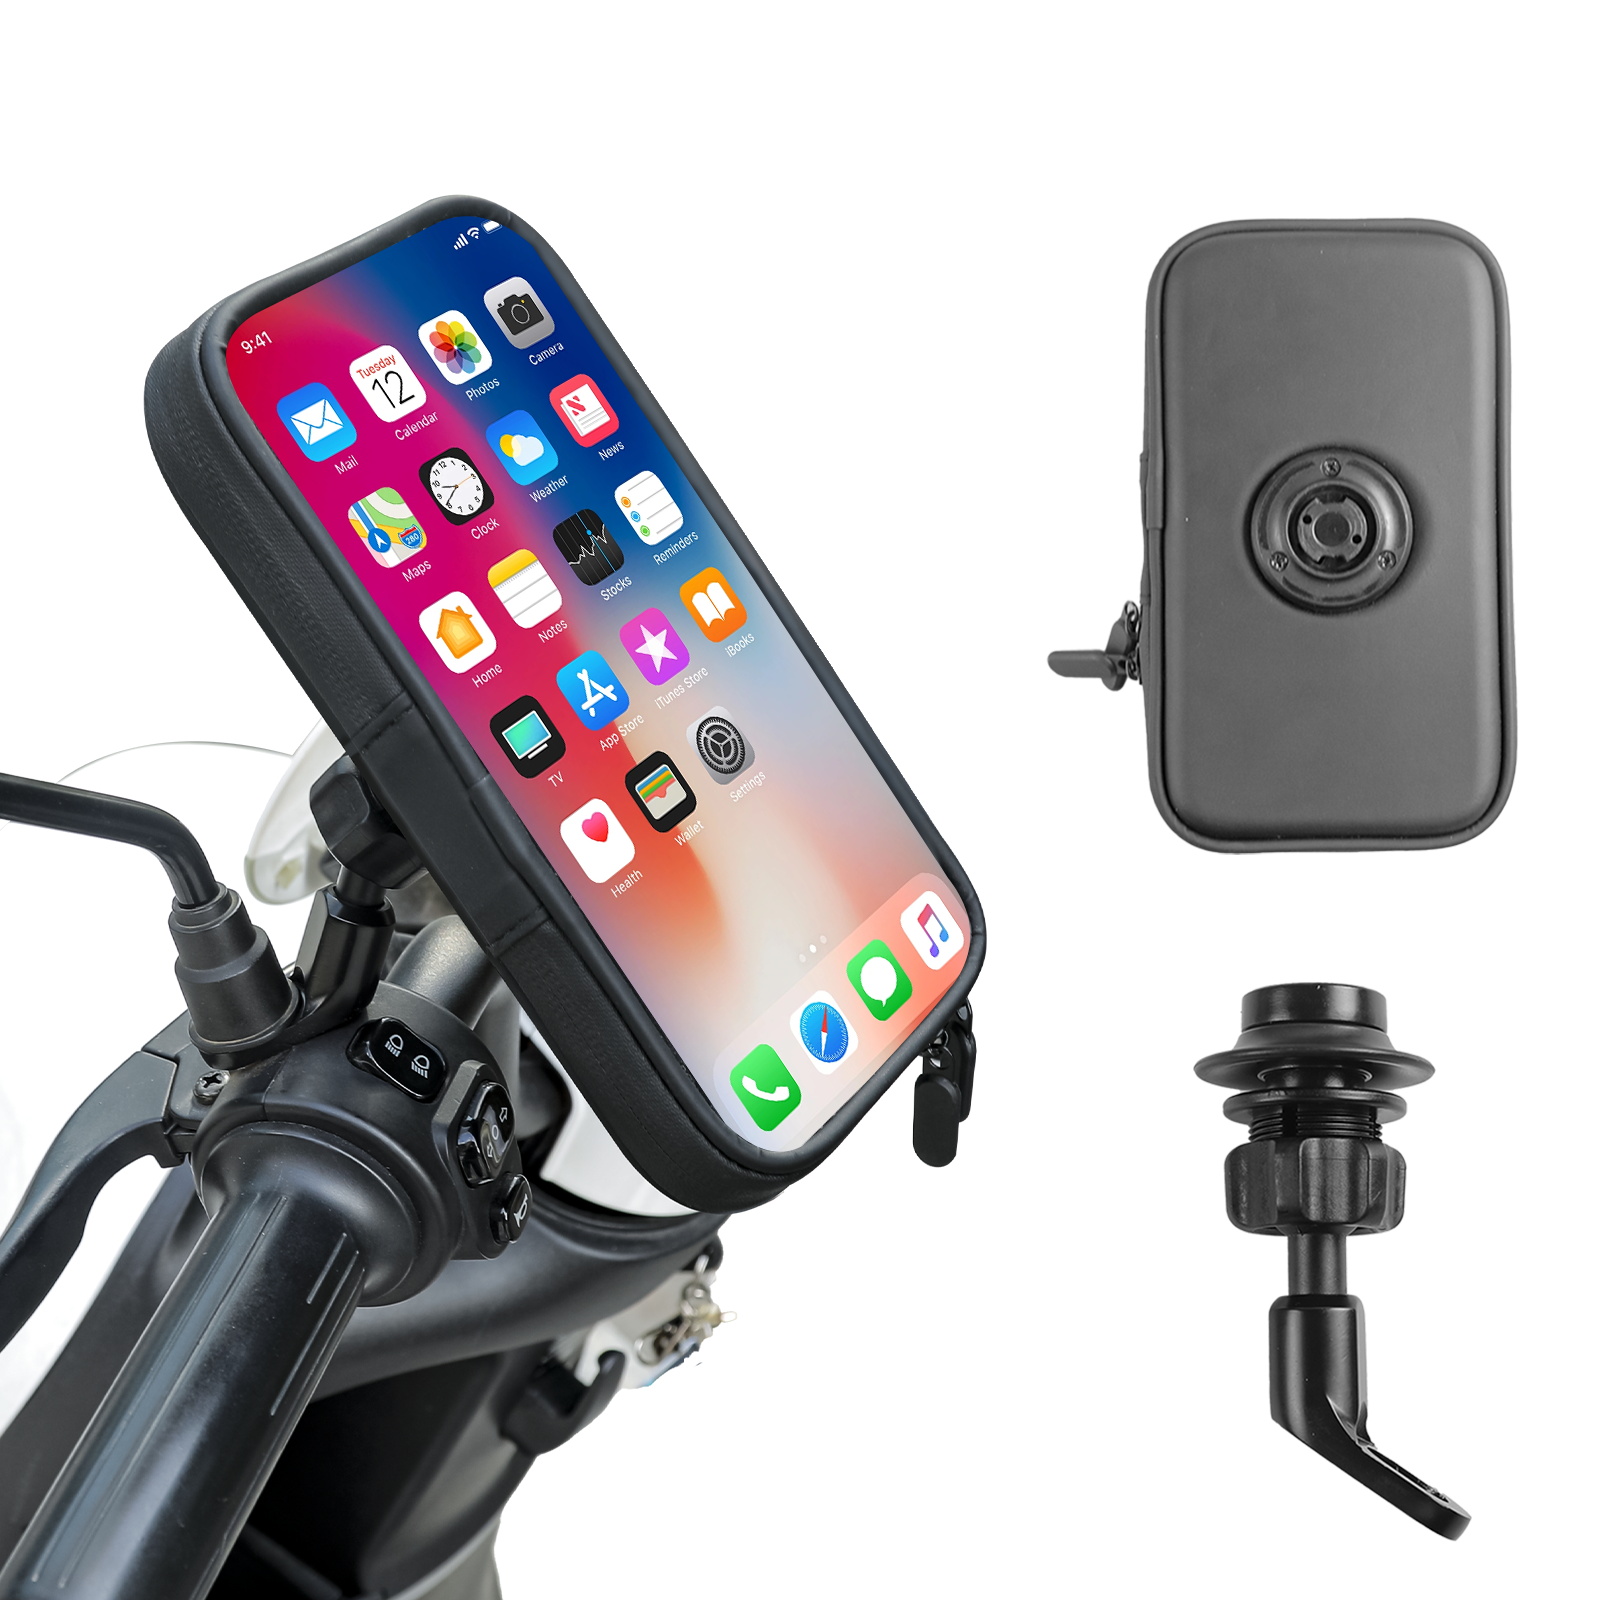 SUNDAREE Motorcycle Phone Waterproof Bag with Aluminum Mirror Mount Holder Clamp, 360° Rotating Moto